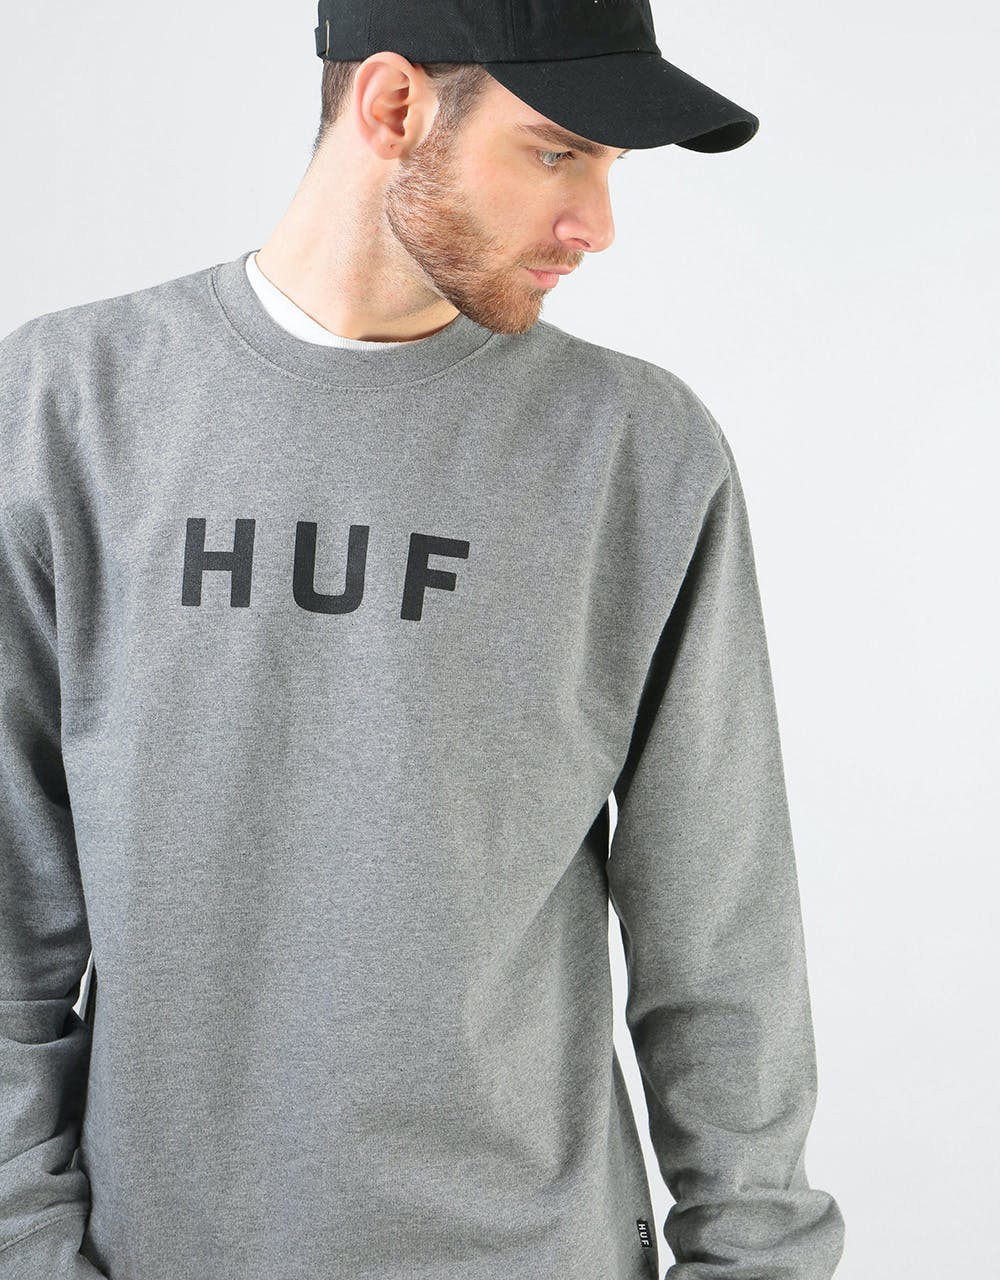 HUF Original Logo Crewneck Sweatshirt - Heather Grey